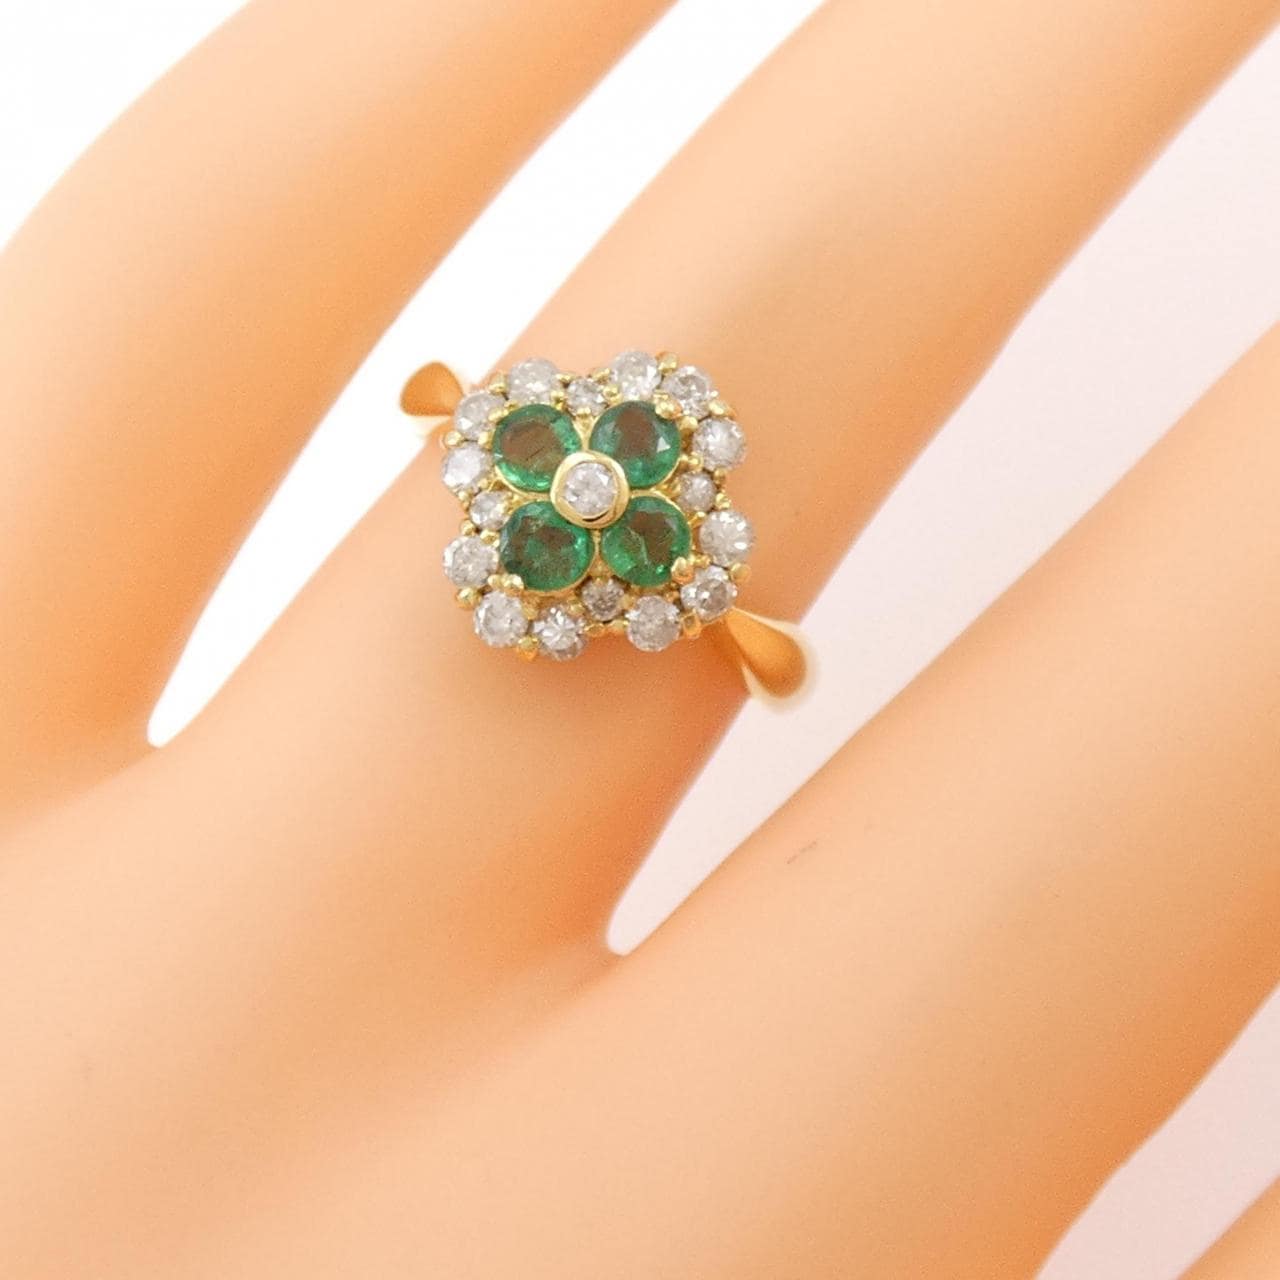 K18YG Flower Emerald Ring 0.34CT